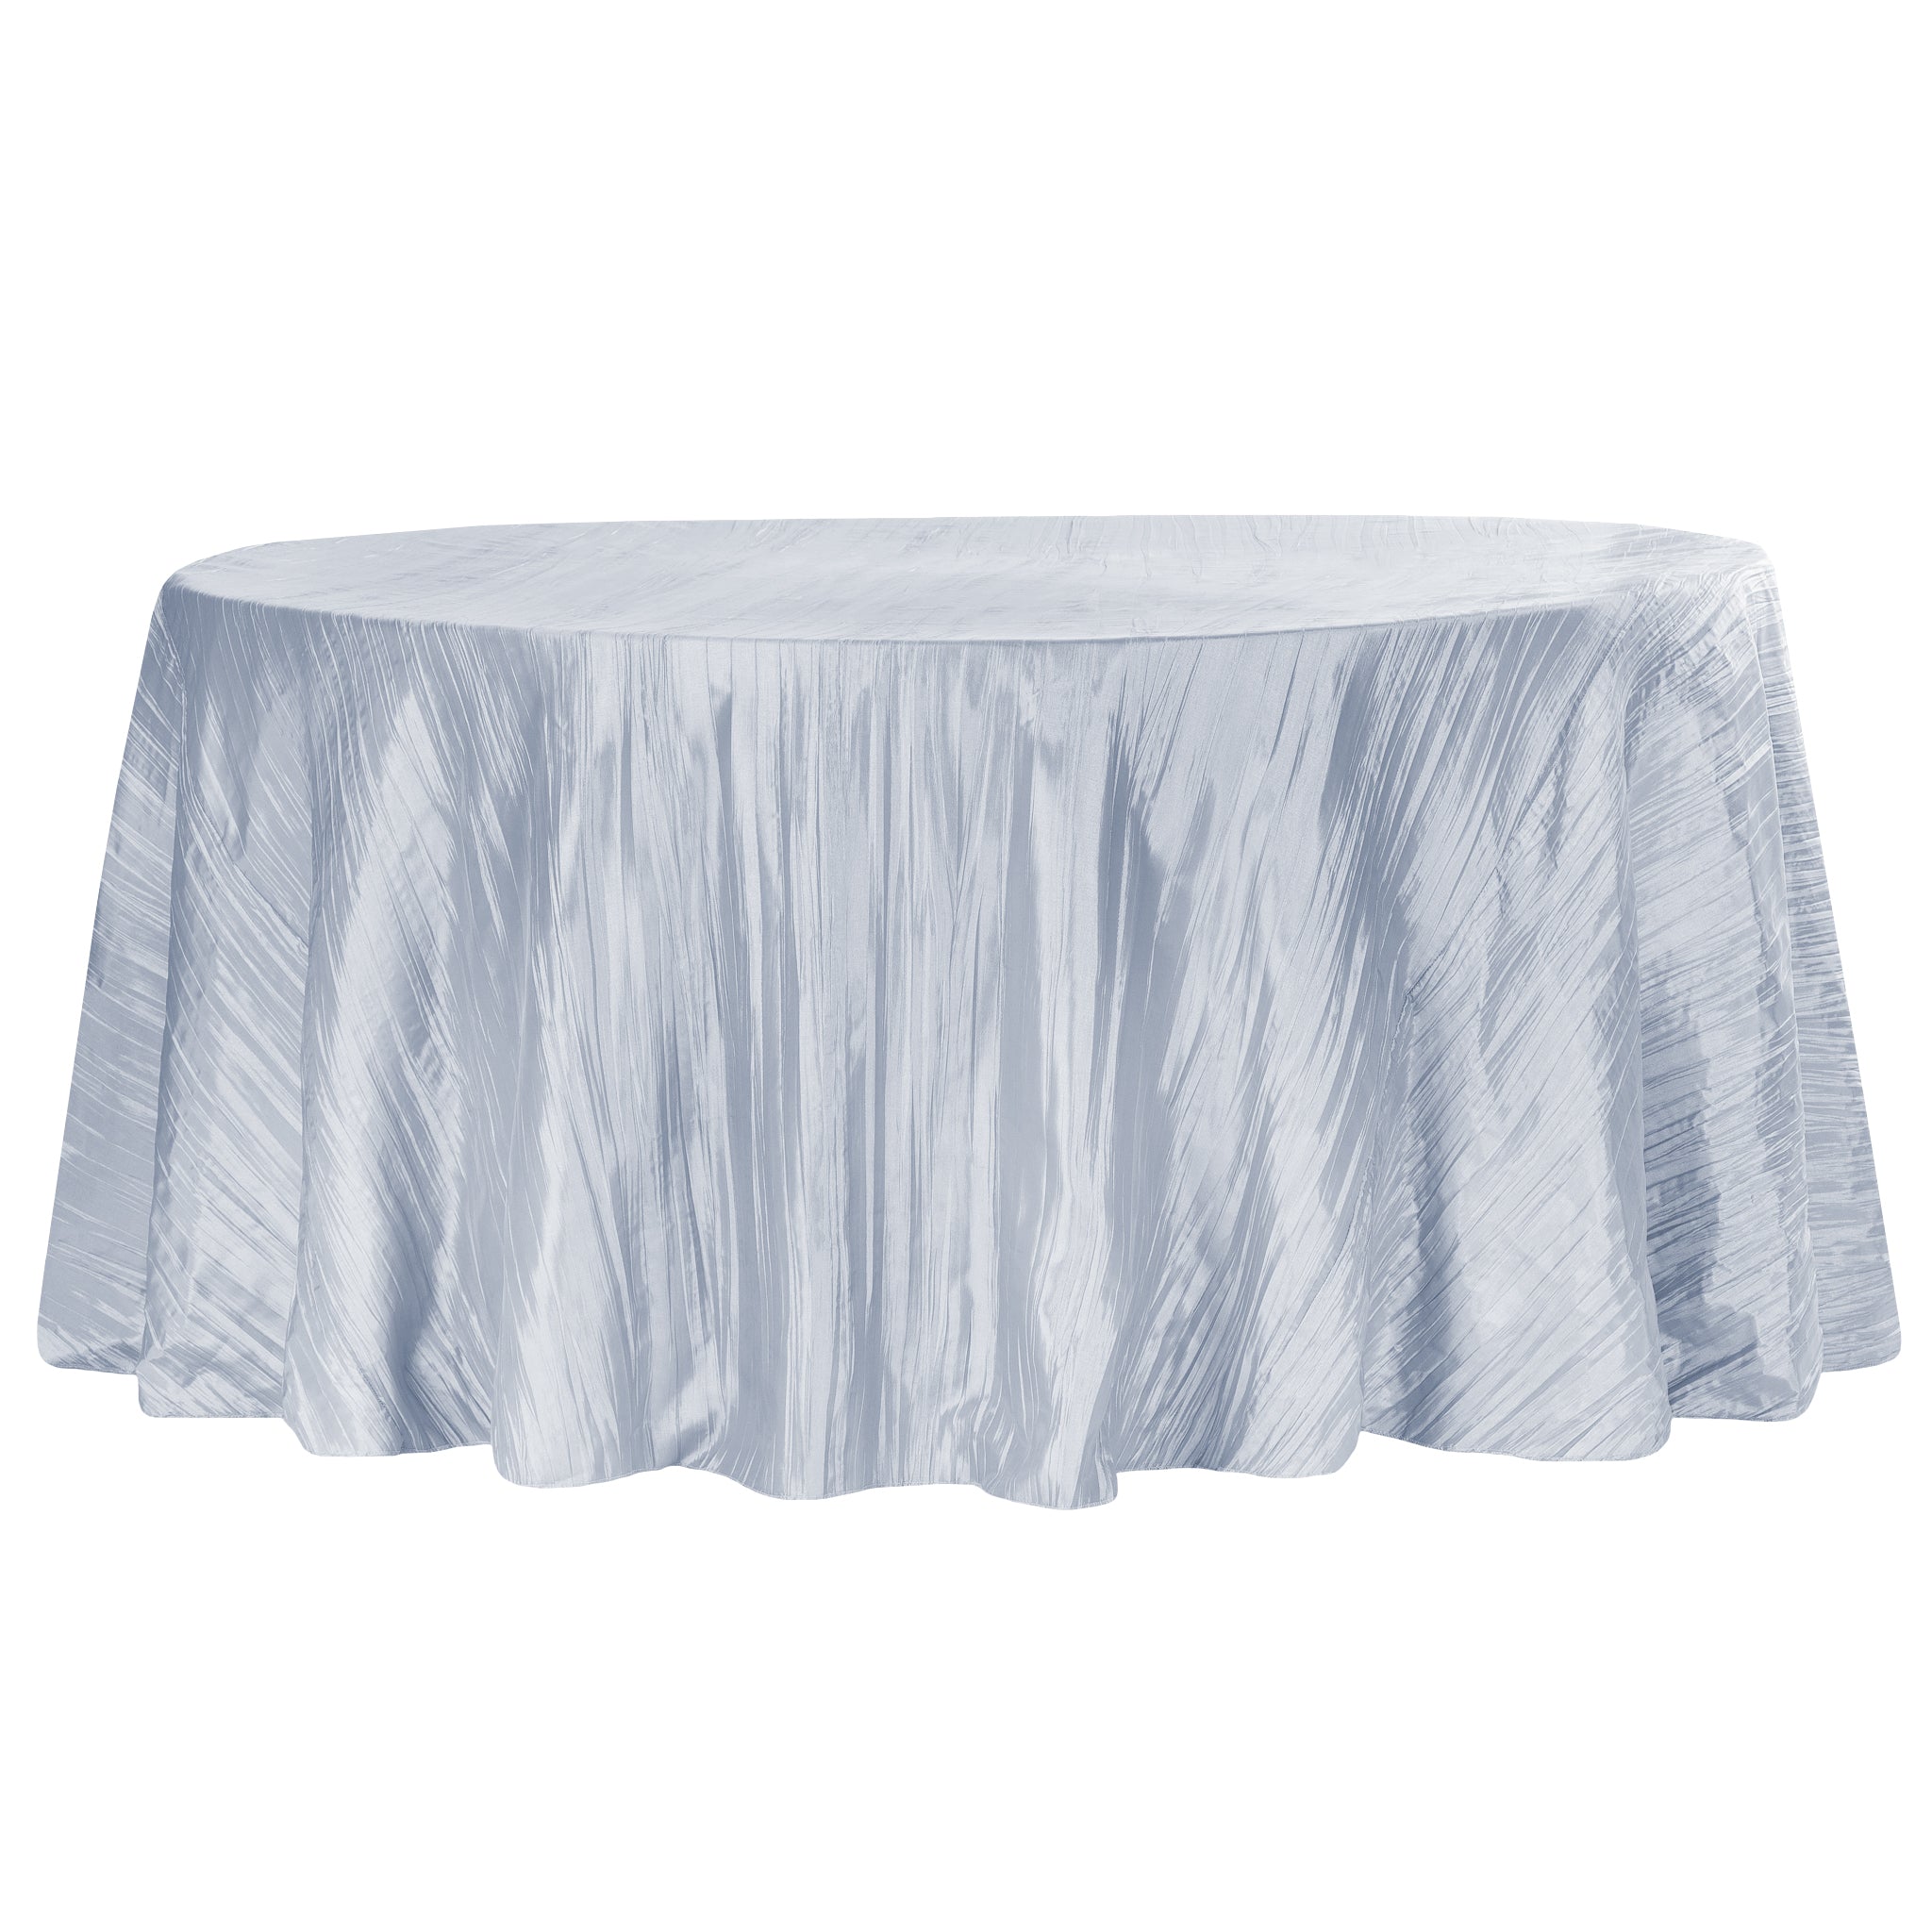 Accordion Crinkle Taffeta 120" Round Tablecloth - Dusty Blue